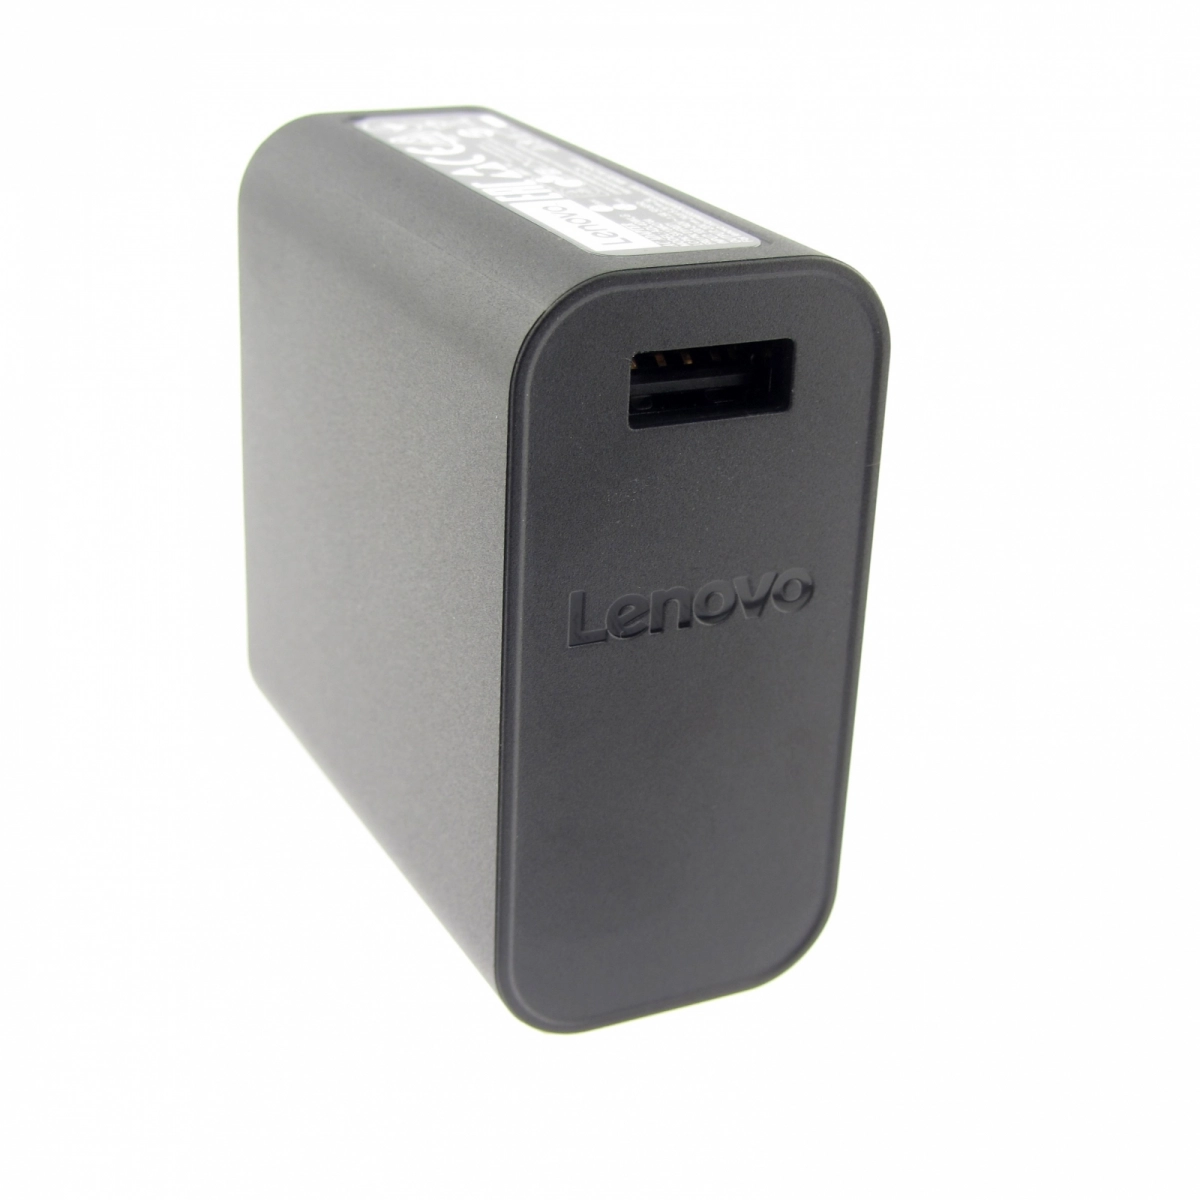 Original Netzteil für LENOVO ADL40WCG 36200585, 20V, 2A, Stecker USB, ohne USB-Kabel